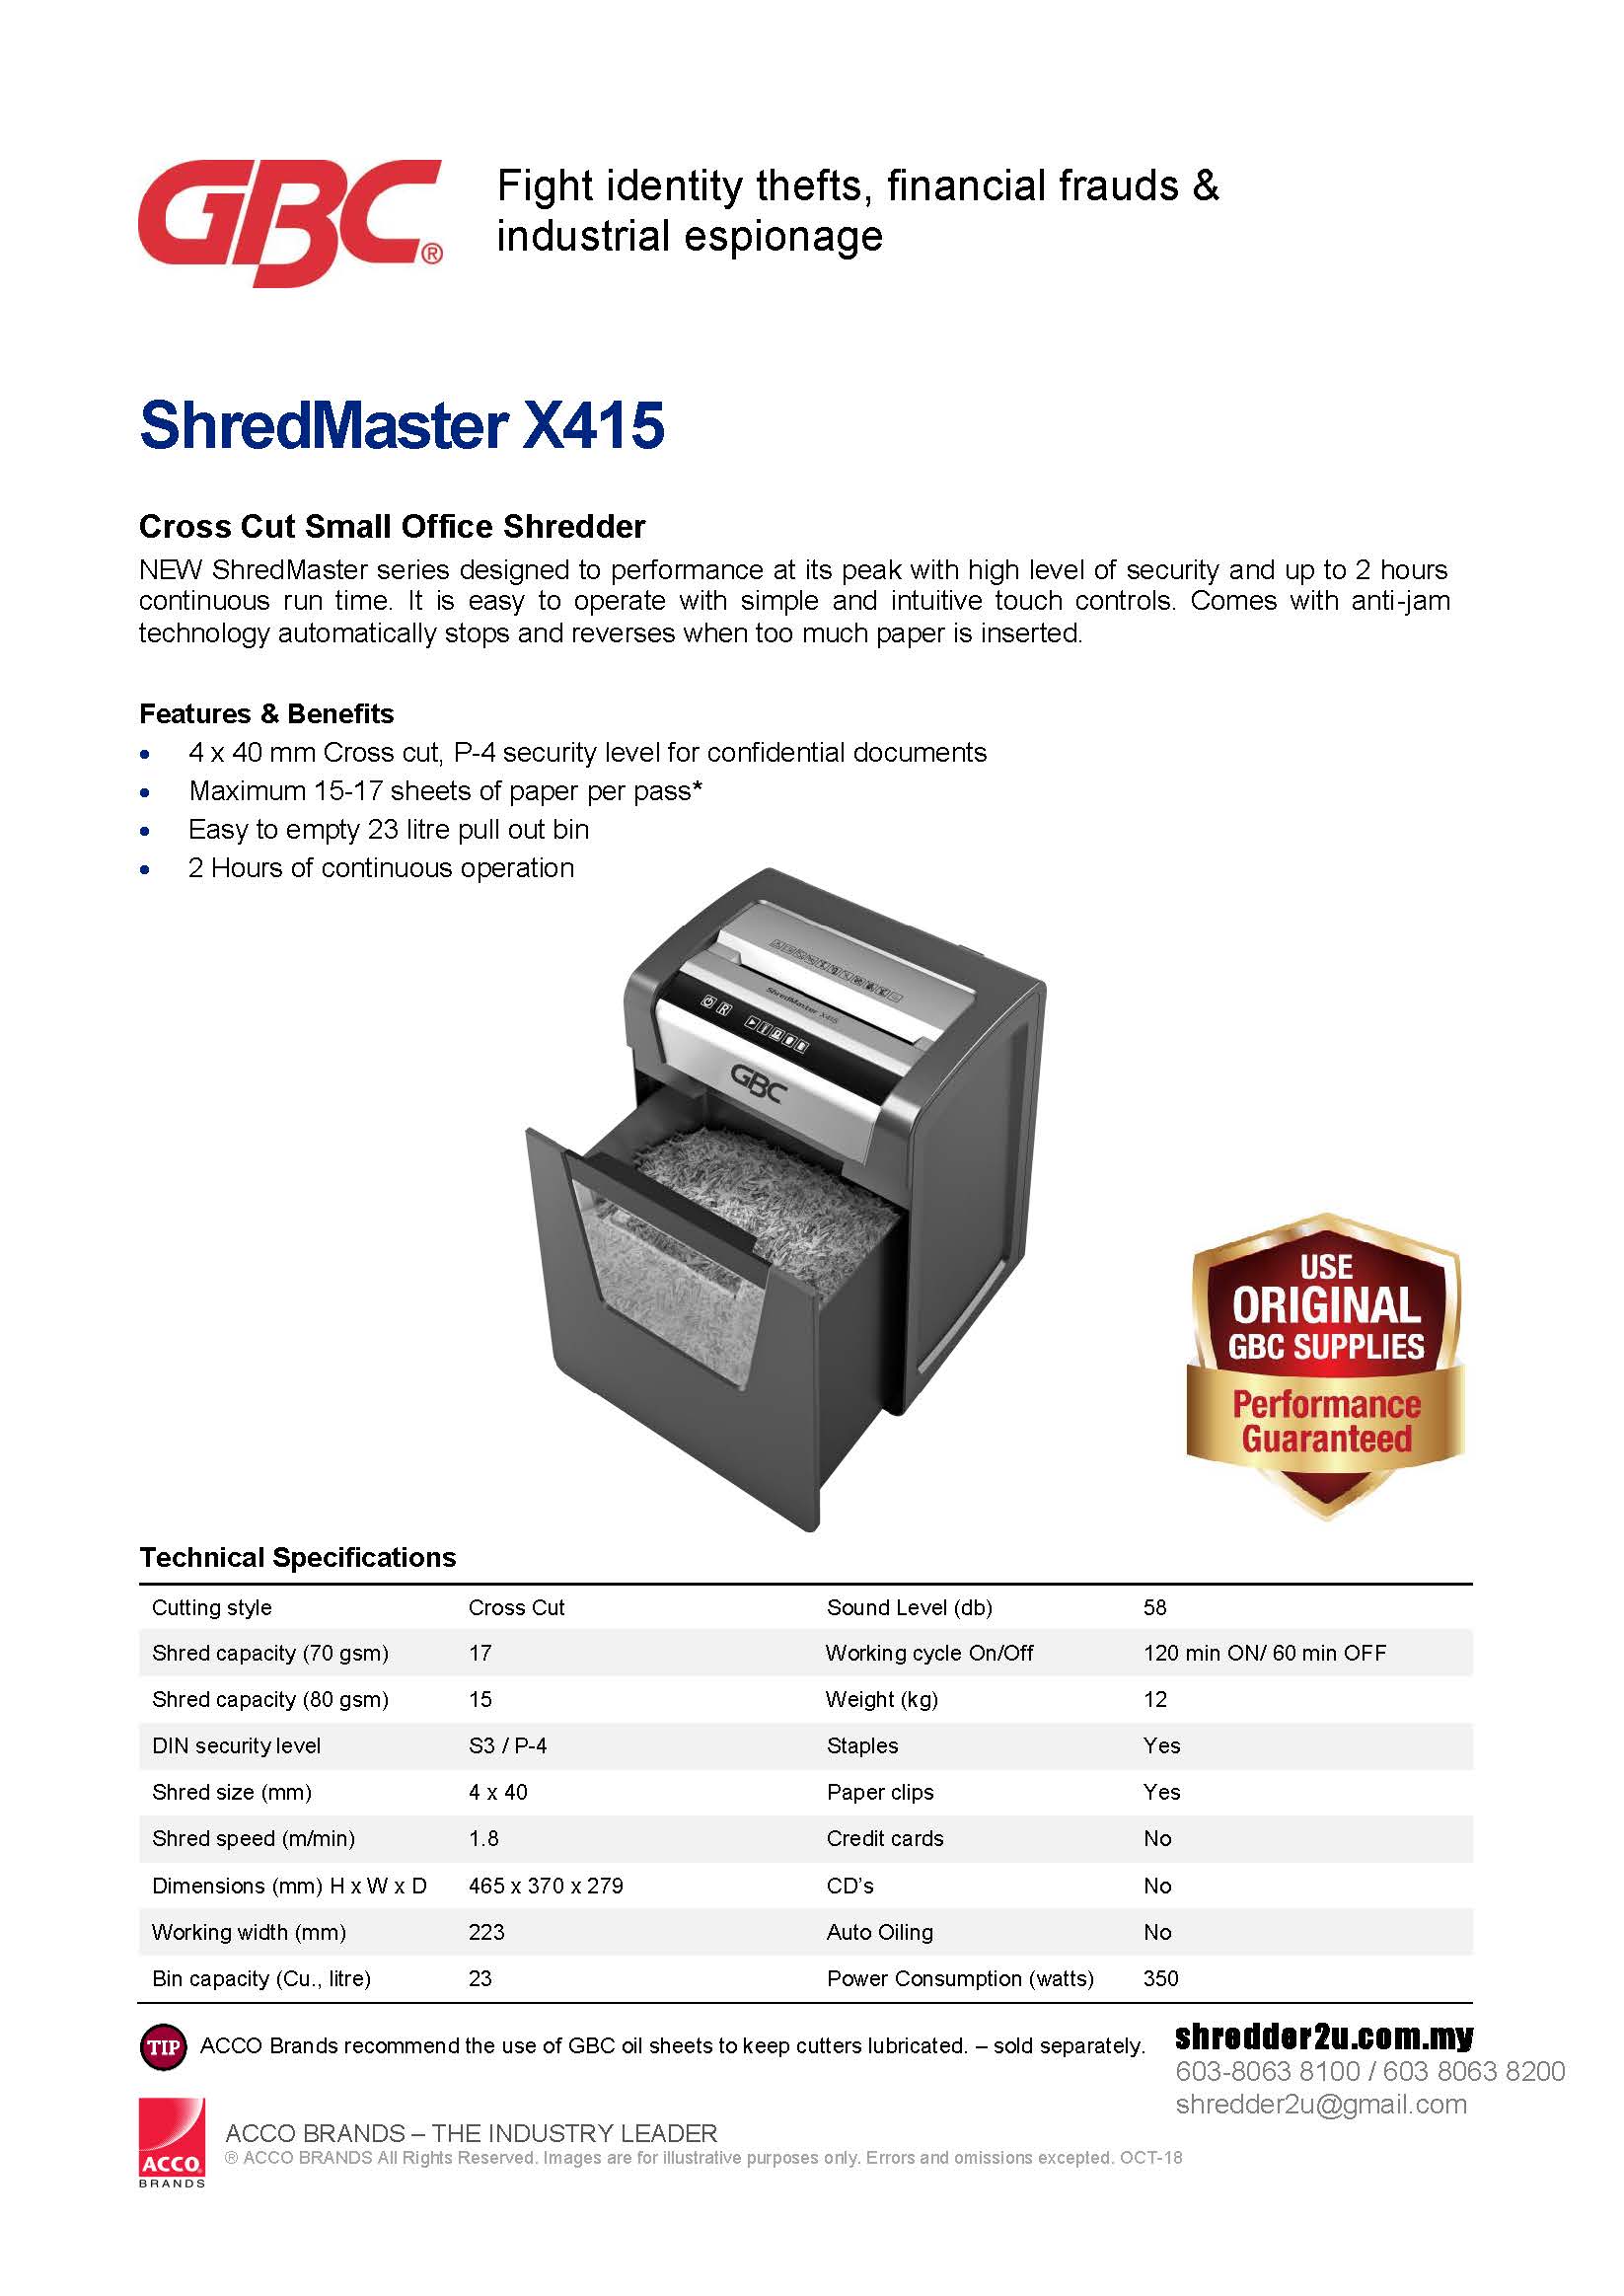 GBC ShredMaster X415 Specification